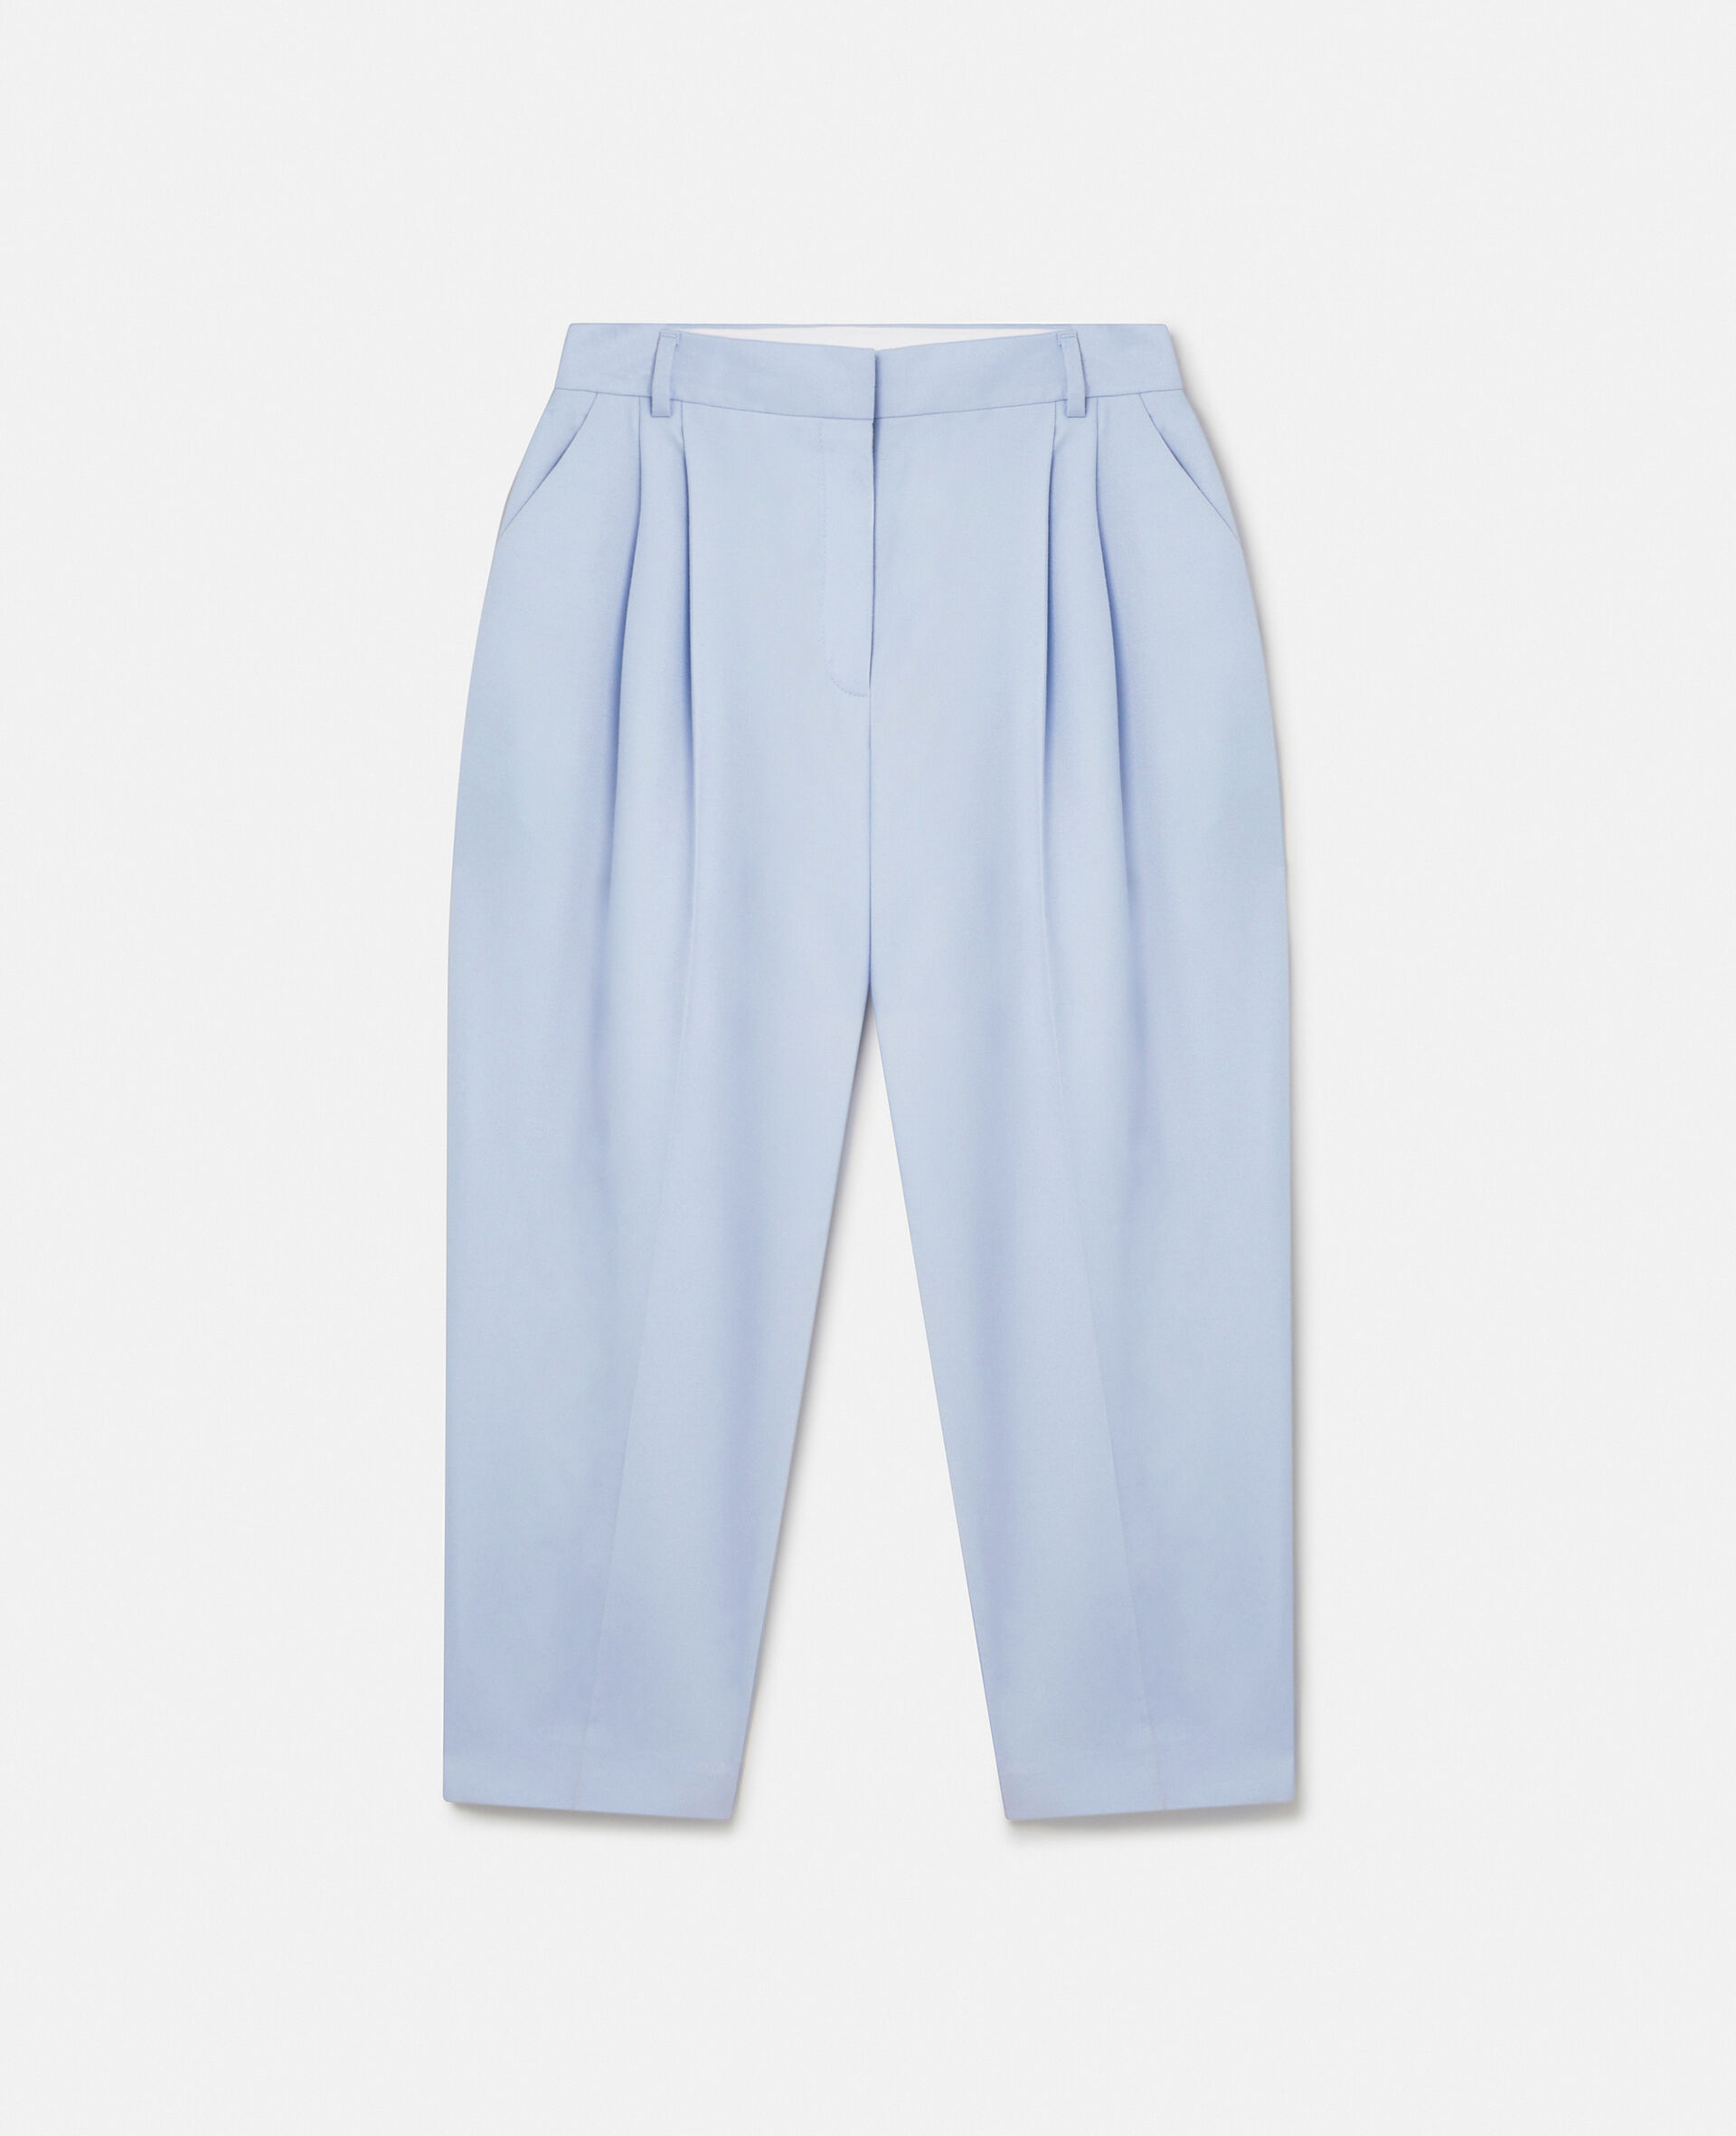 Pantalon plisse court-Bleu-medium